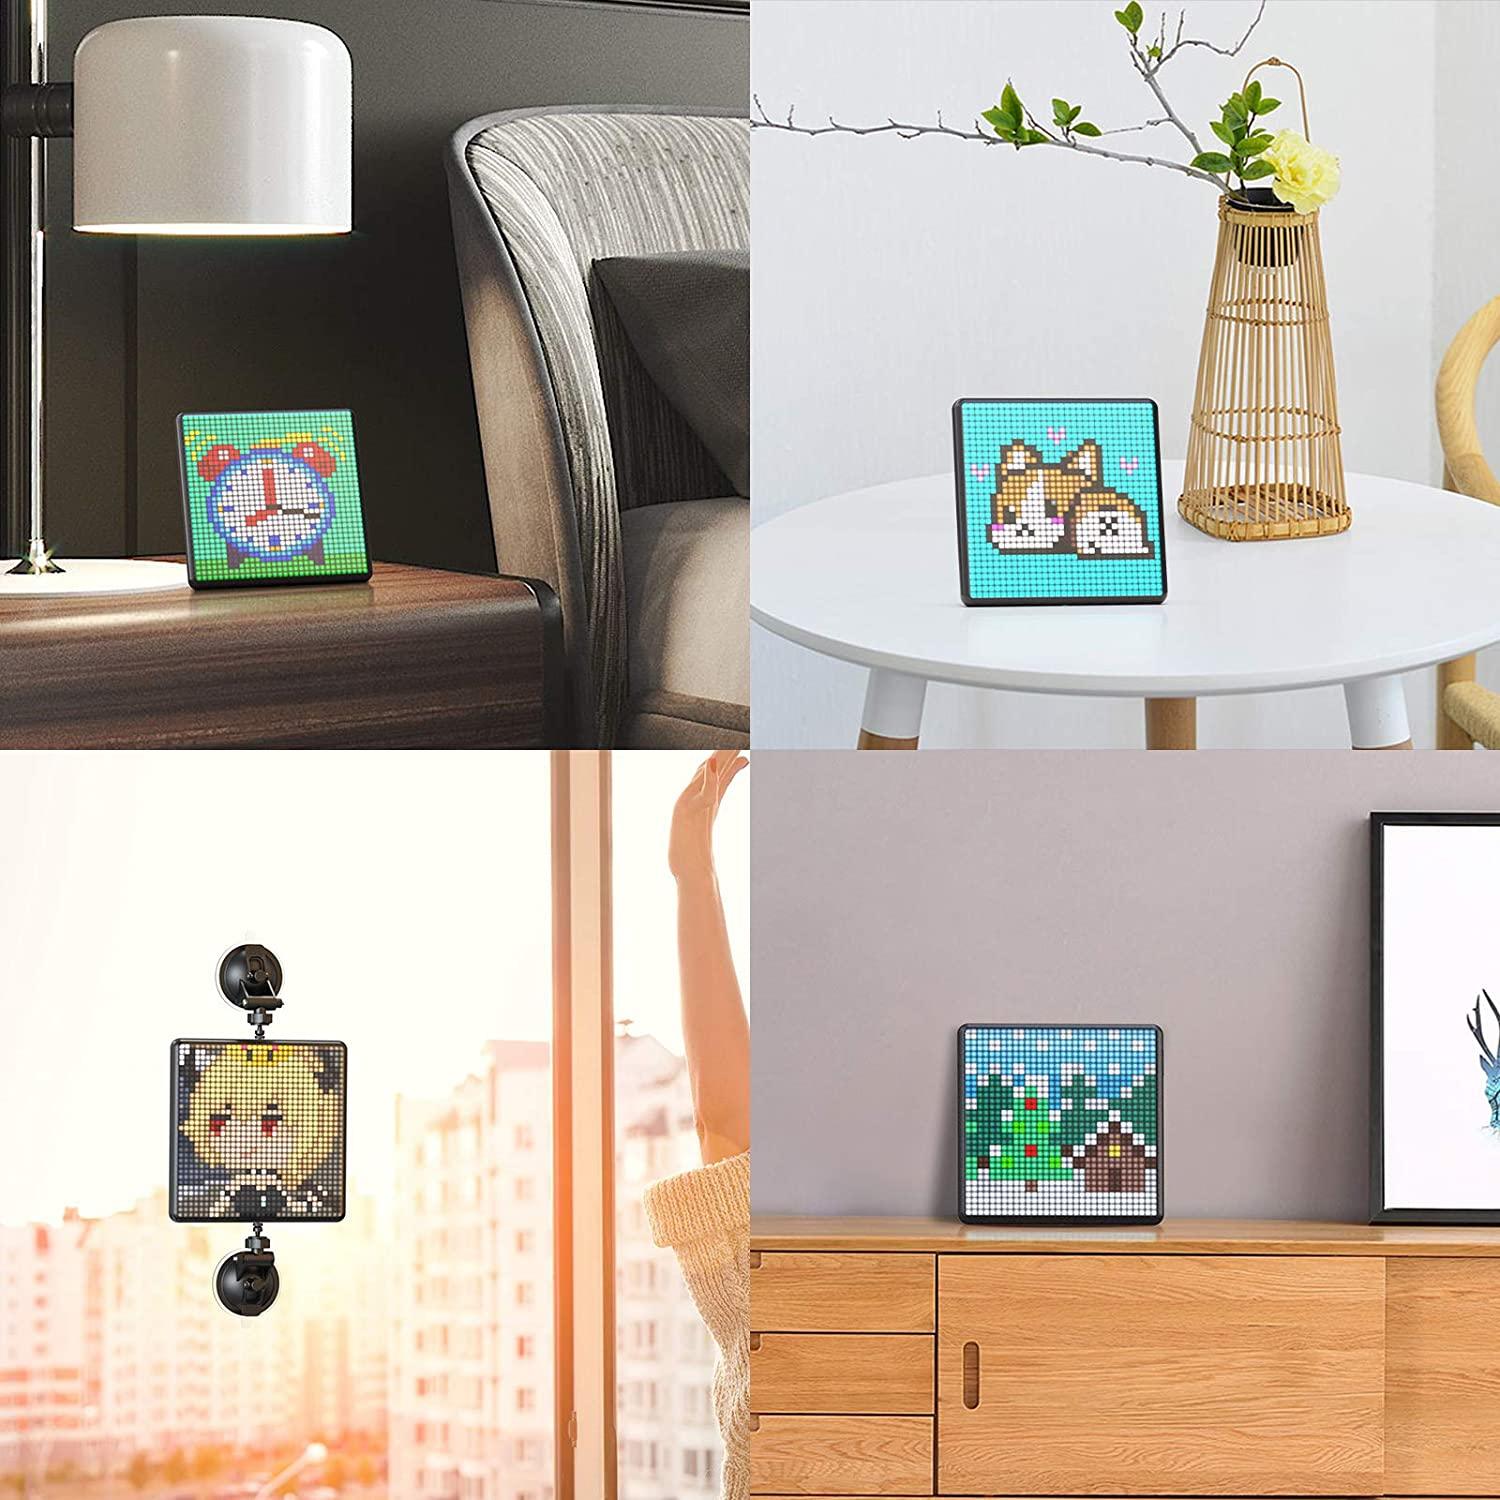 Divoom Pixoo Max Digital Display Frame - Pixel Art and Decorative LED Lighting